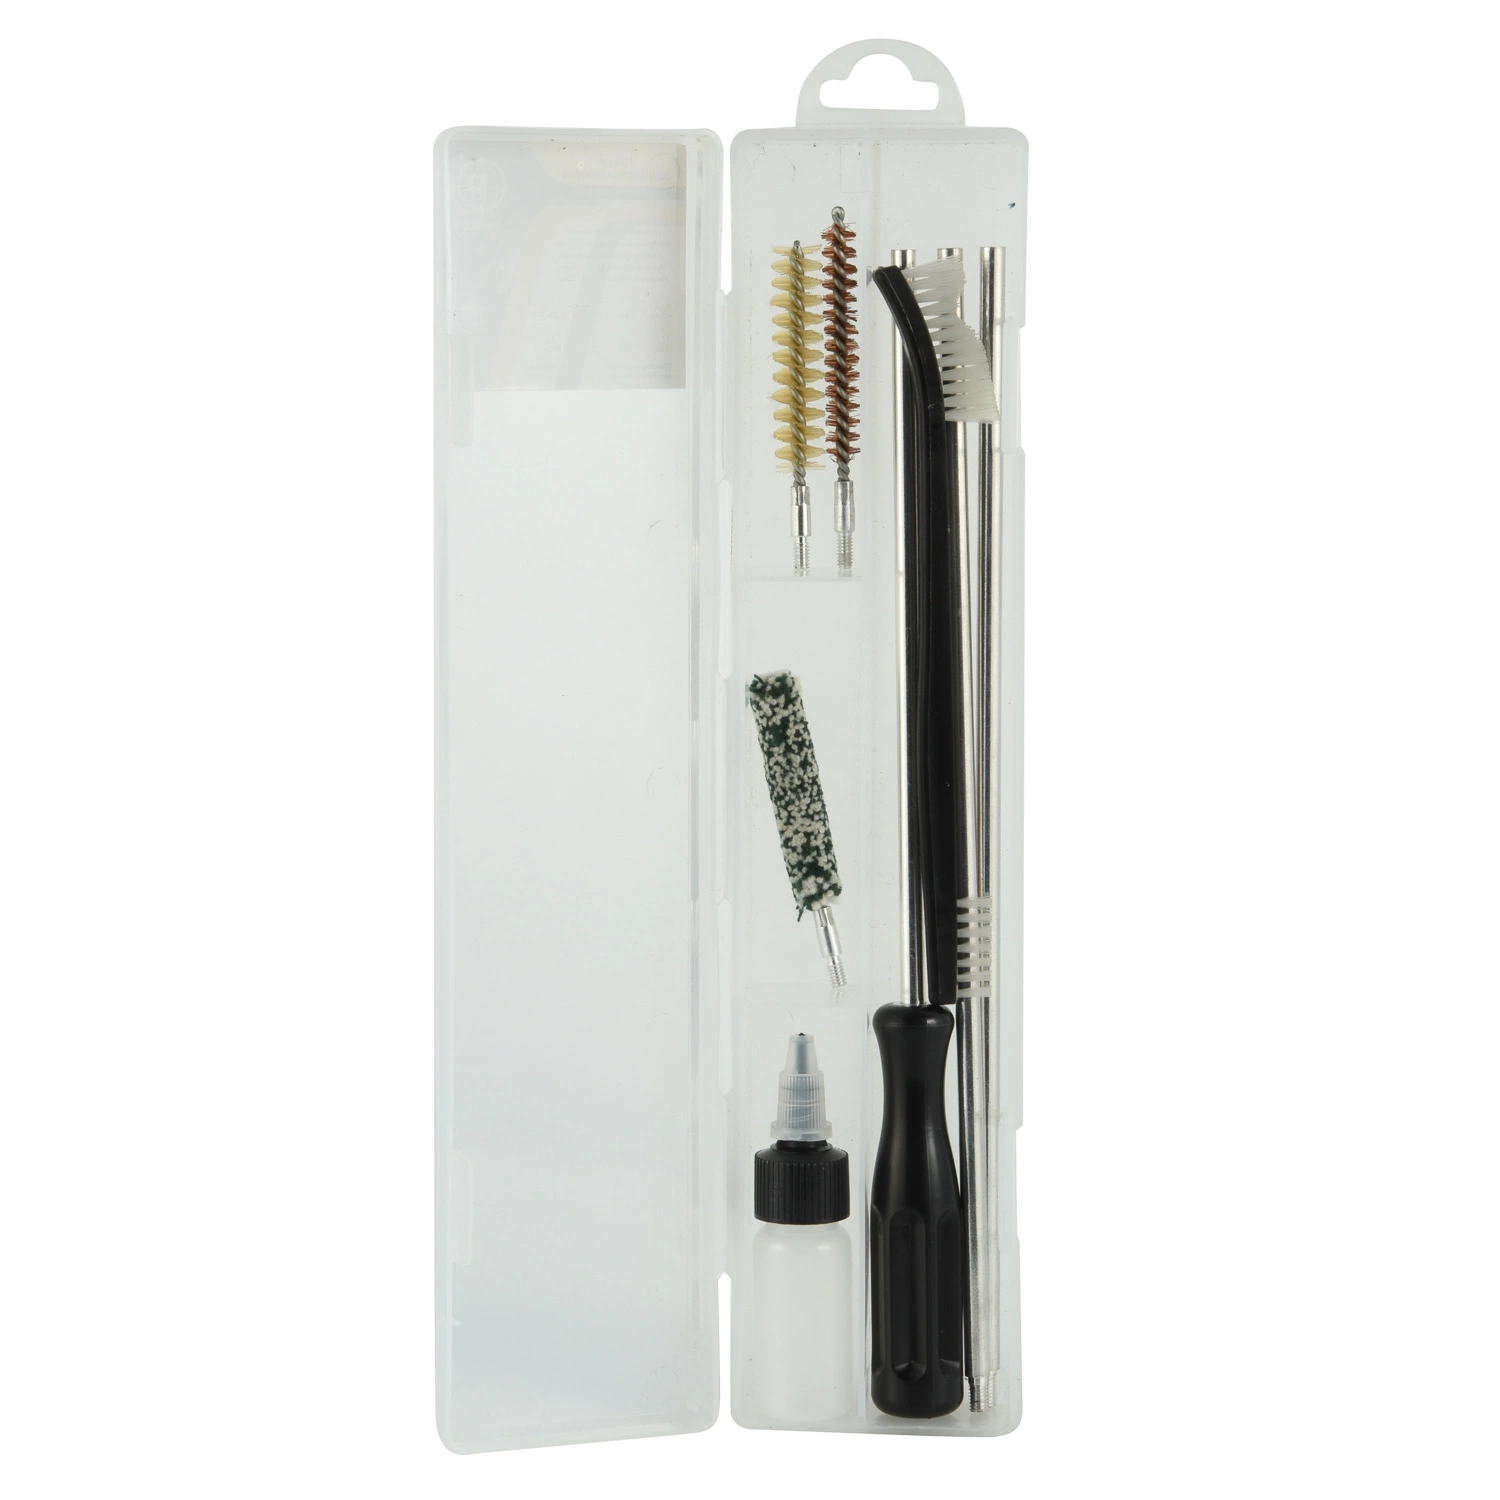 5.6mmbrush Cleaning Kit Bore Bruhes Brush Accessories Barrel Brush